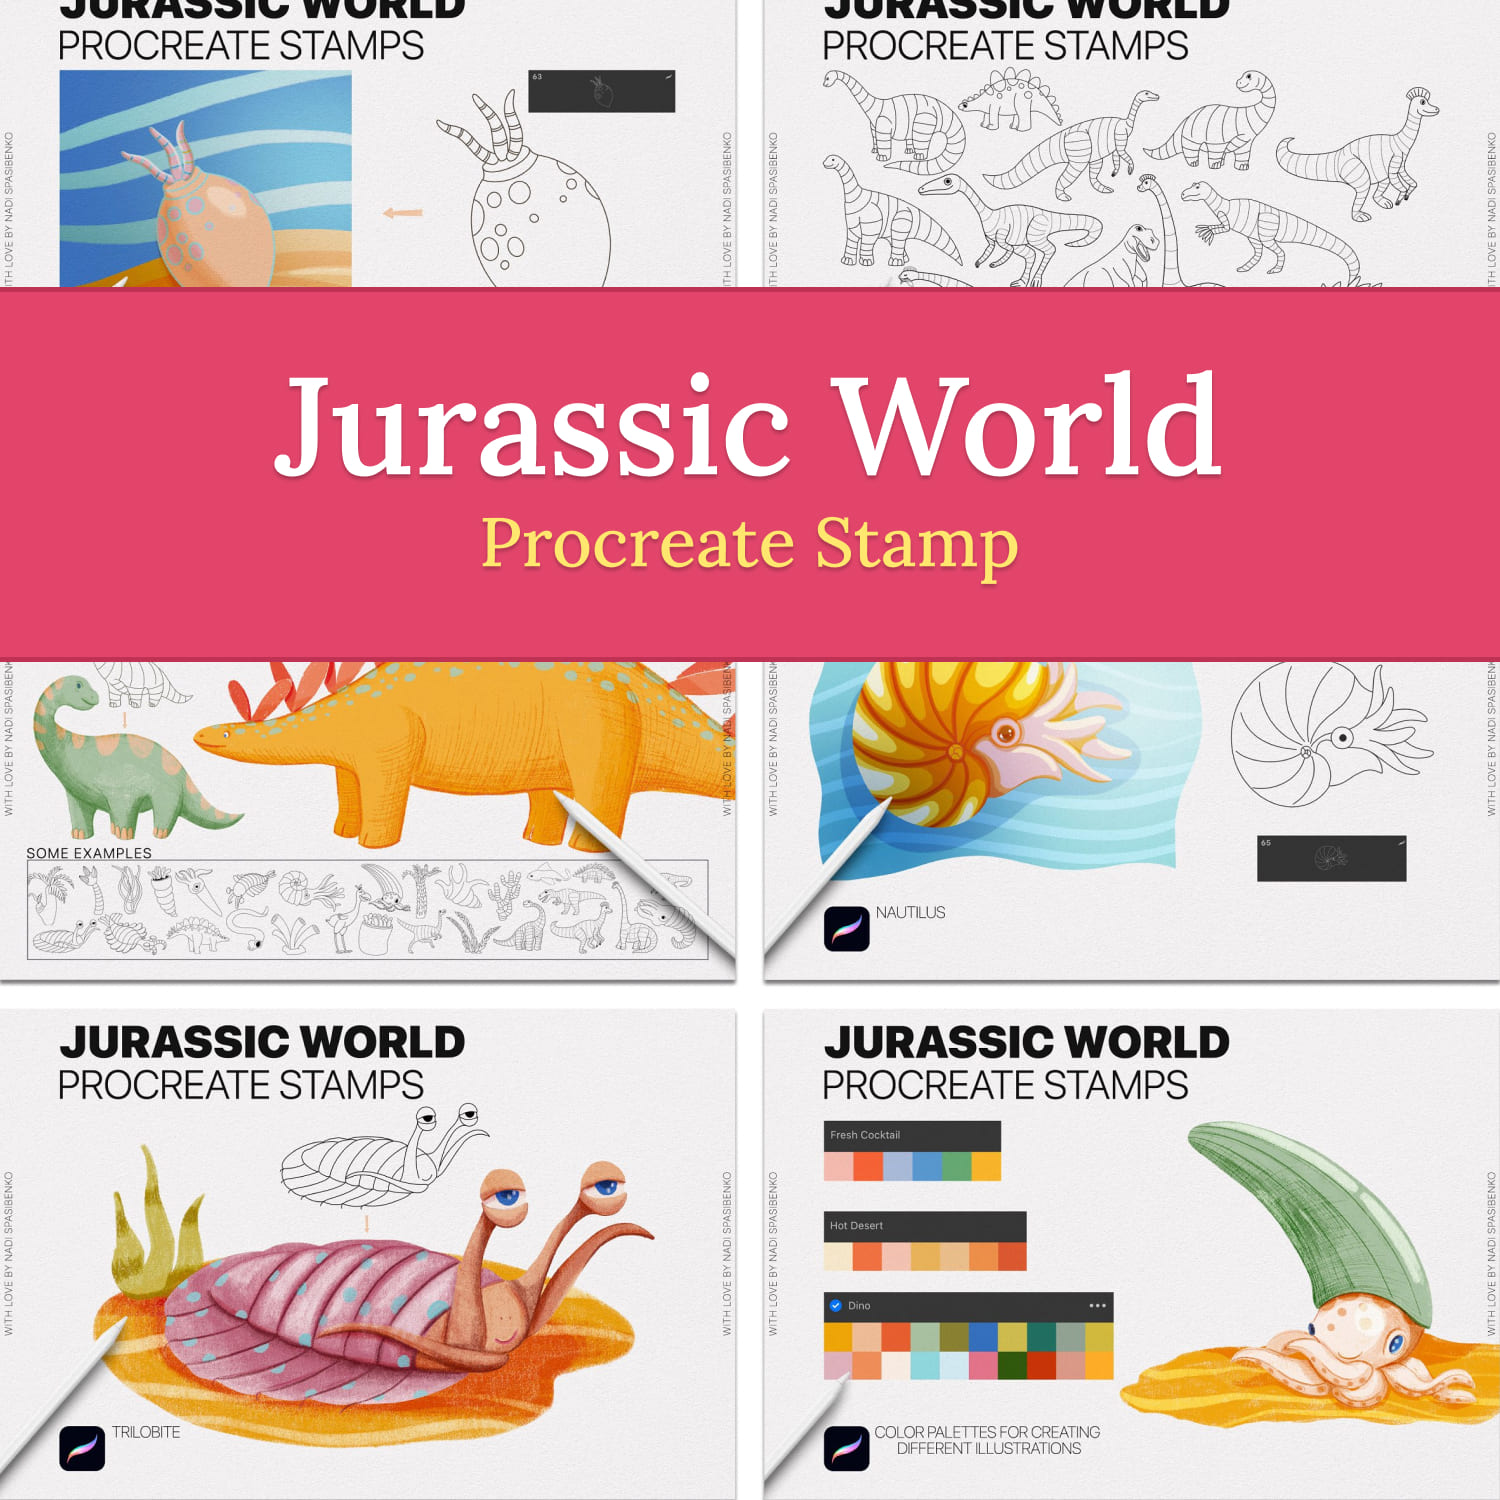 Slides of Jurassic world procreate stamp.